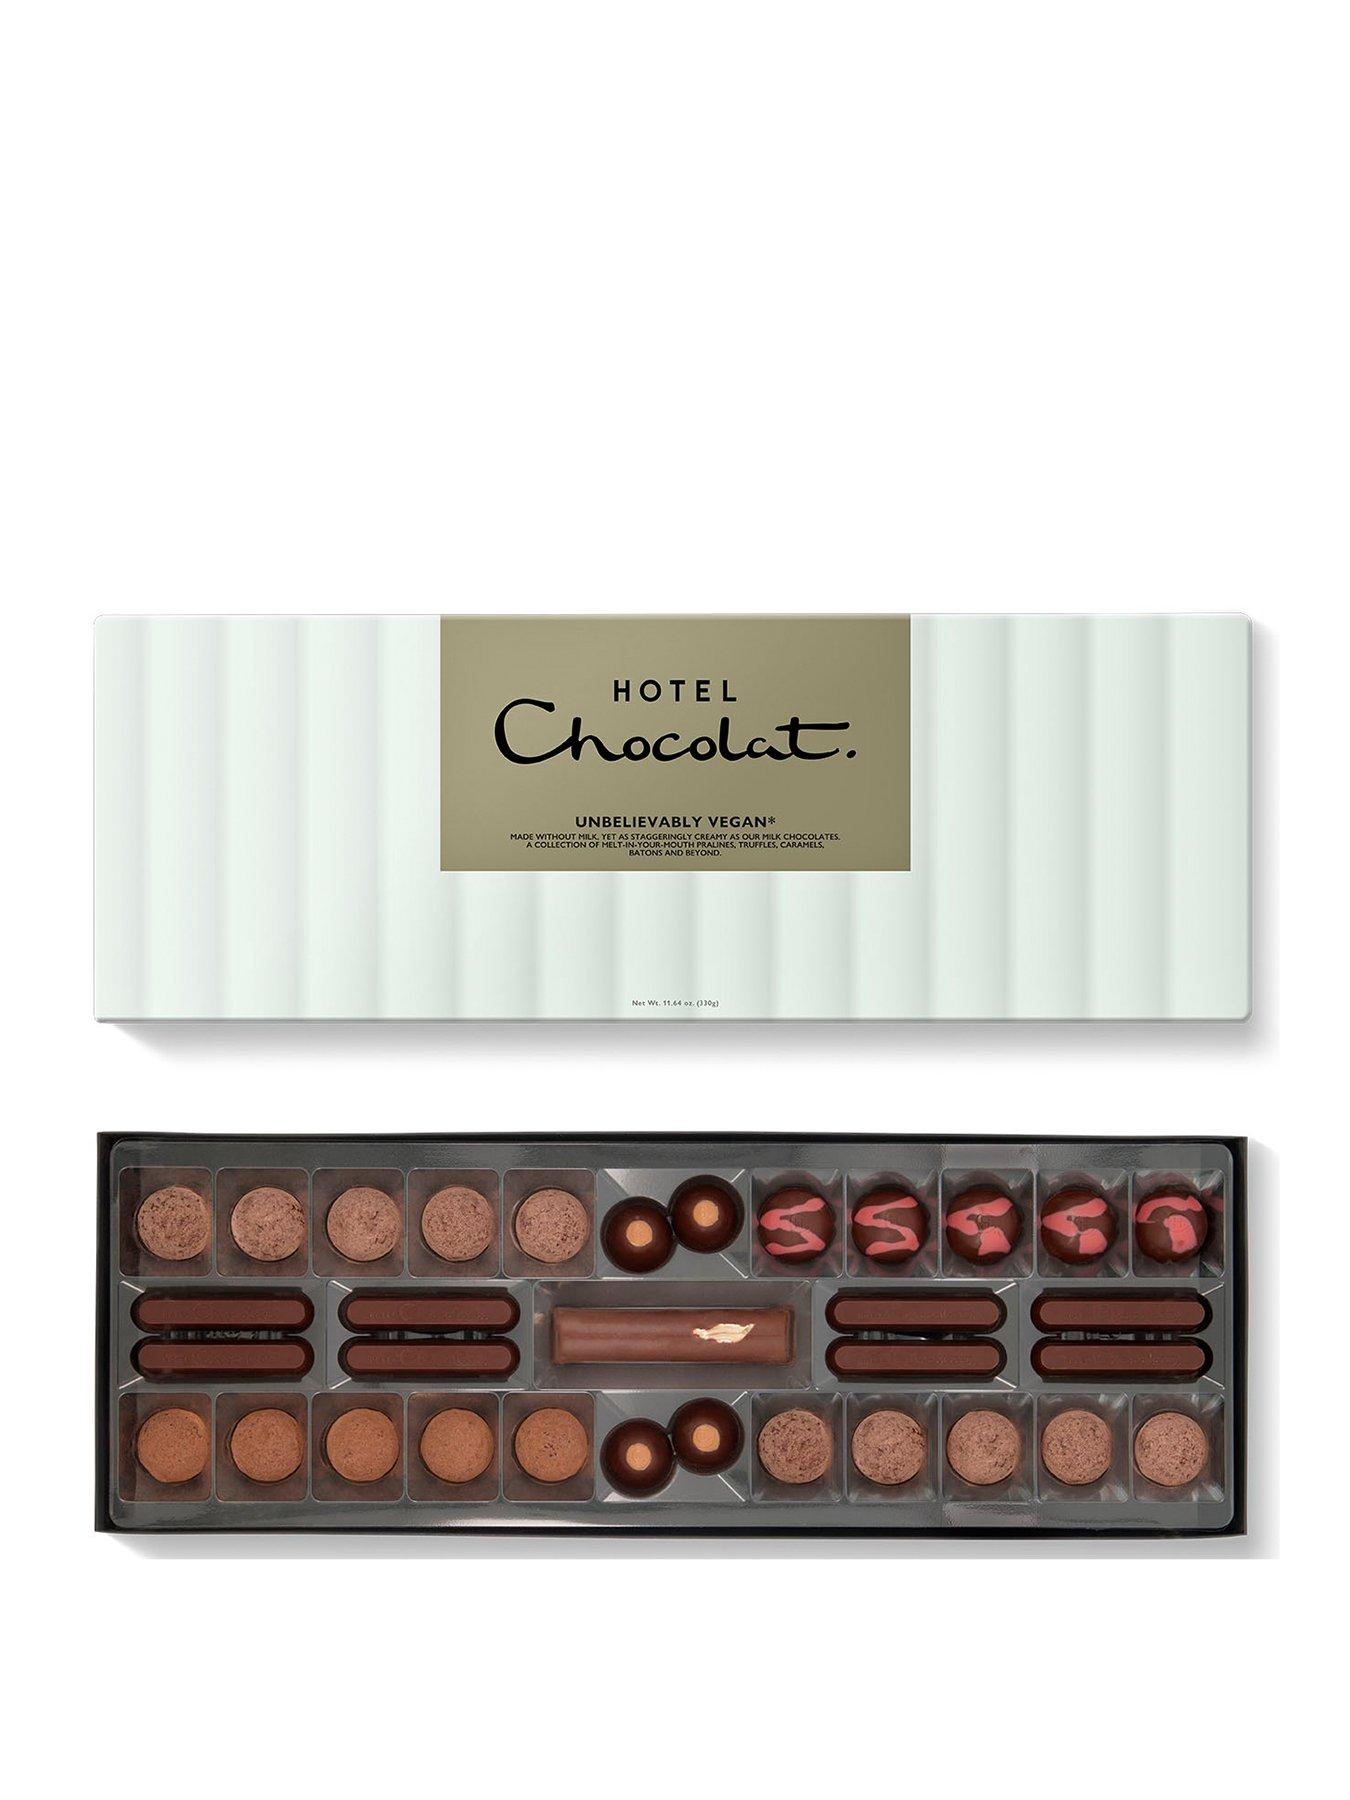 Velvetiser Hotel Chocolat (Grey)- Hot Chocolate Drink Maker+ 1box